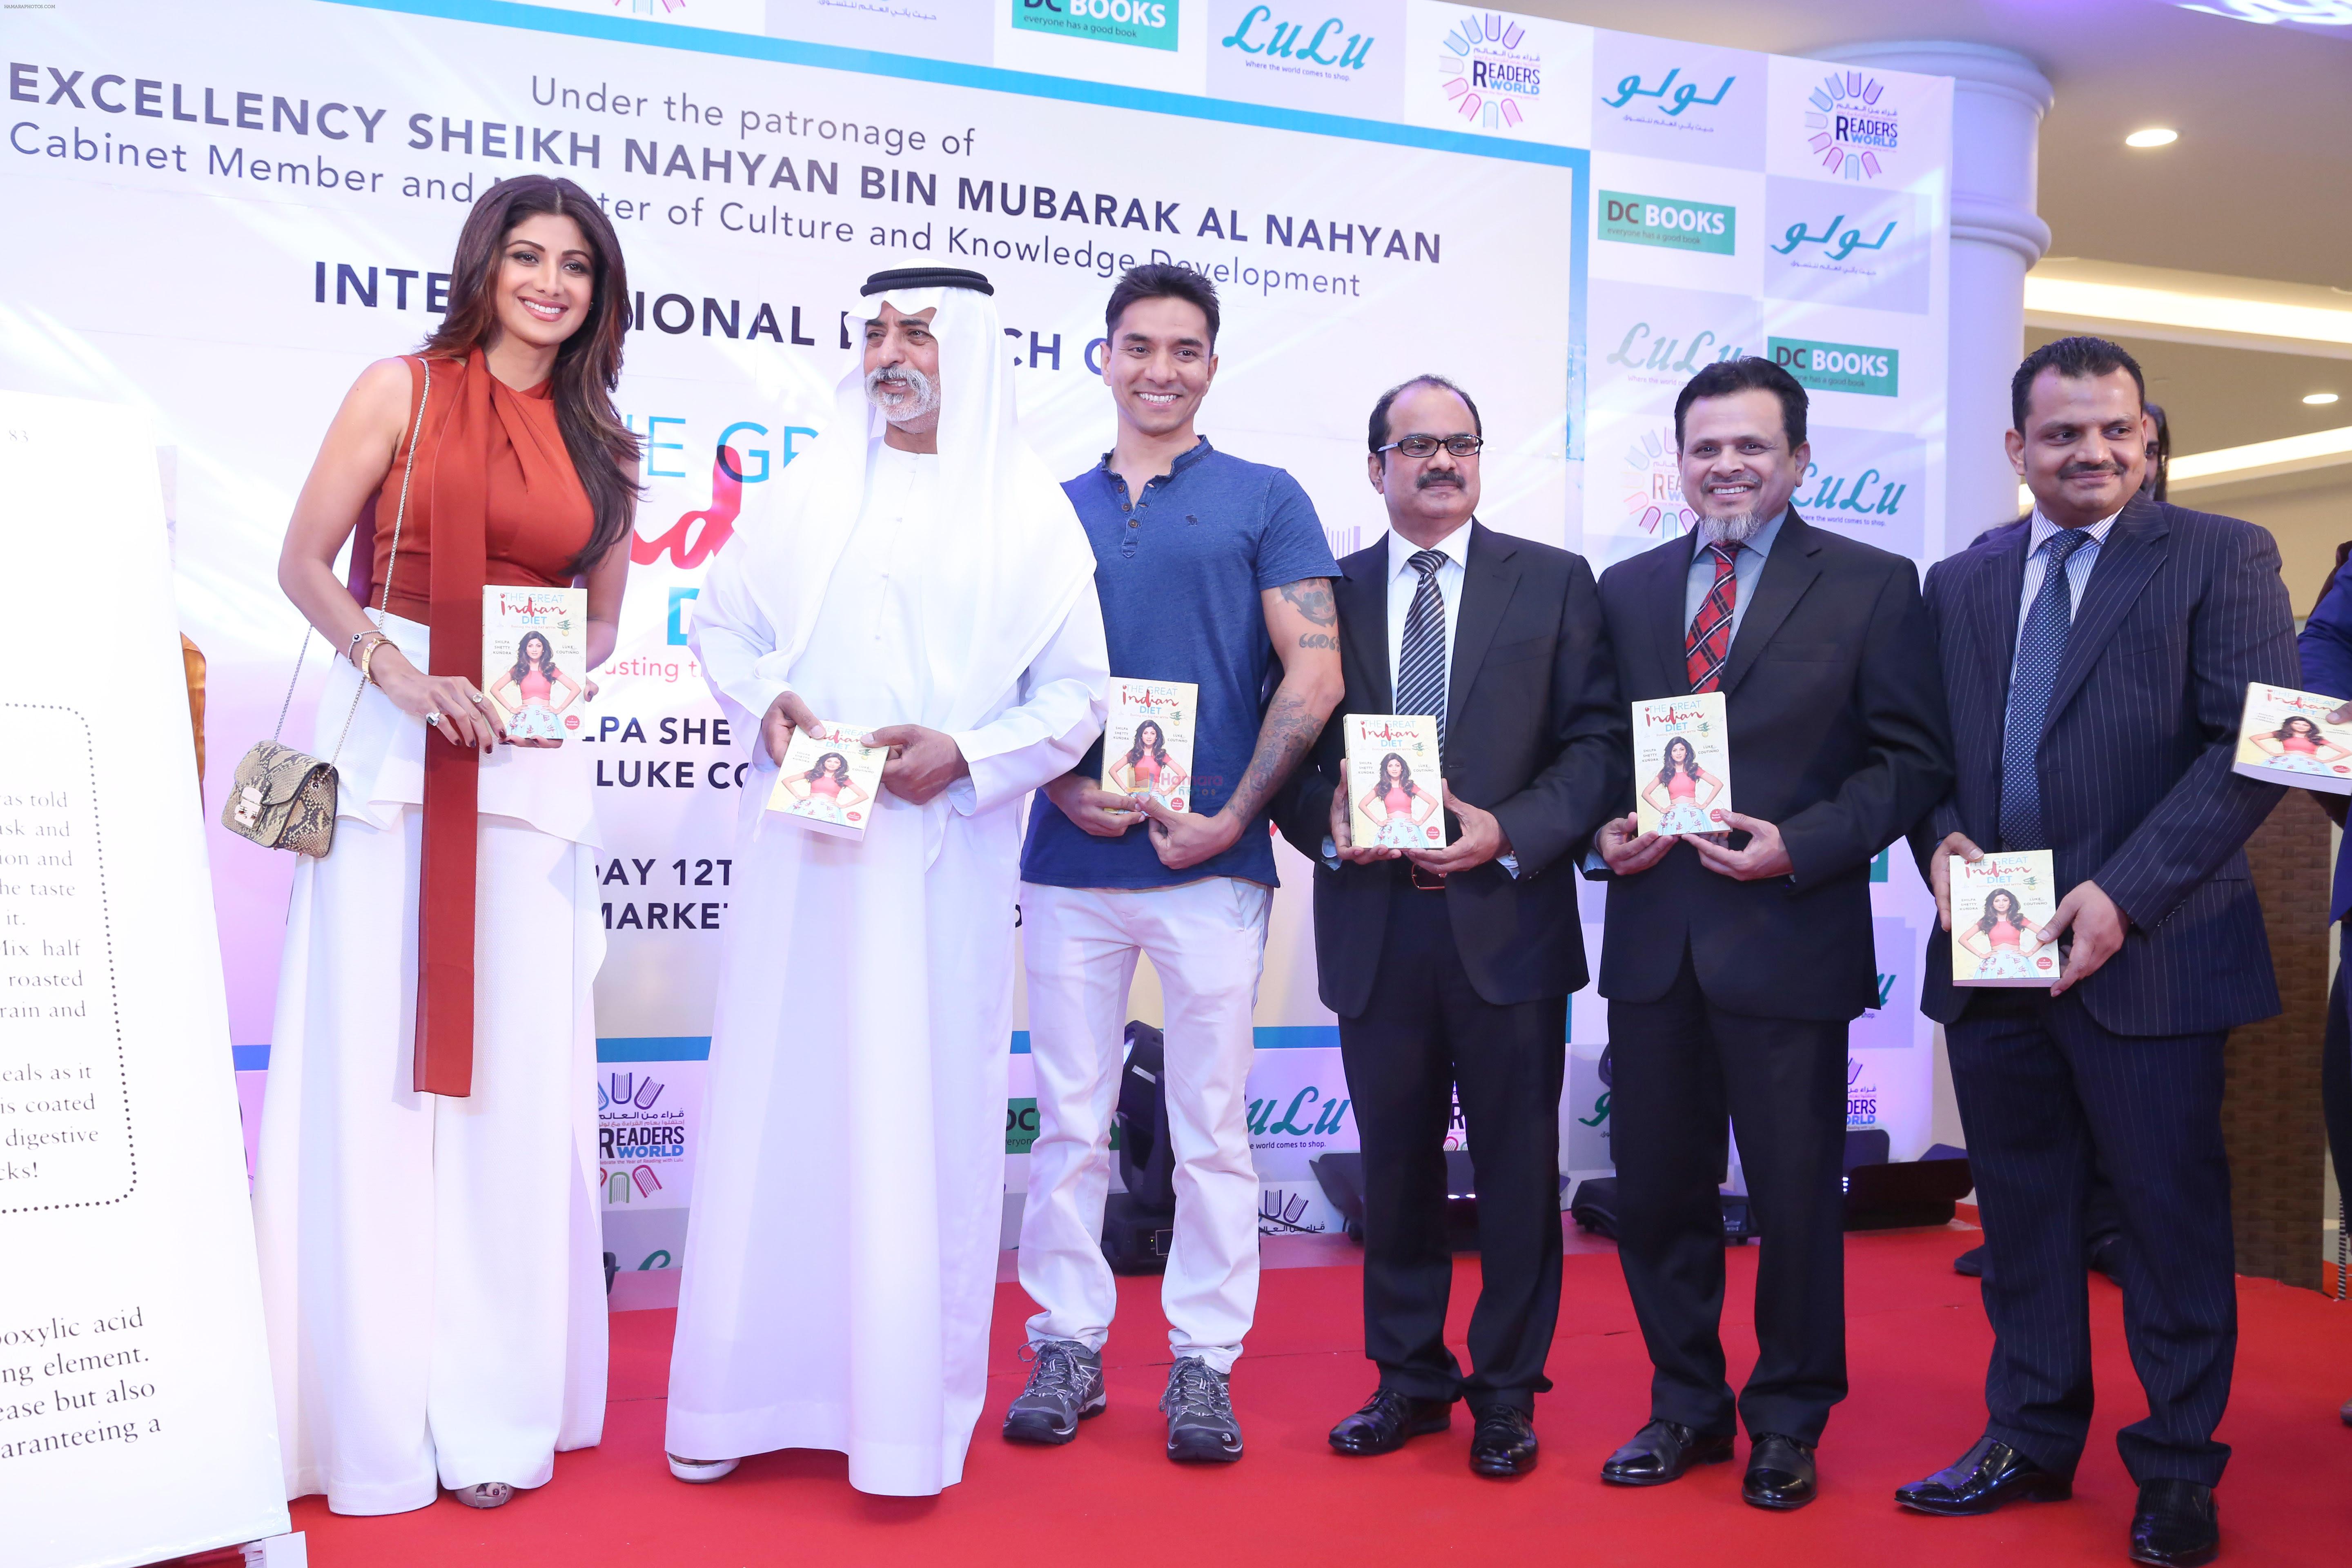 Shilpa Shetty's book launch in Dubai on 18th May 2016